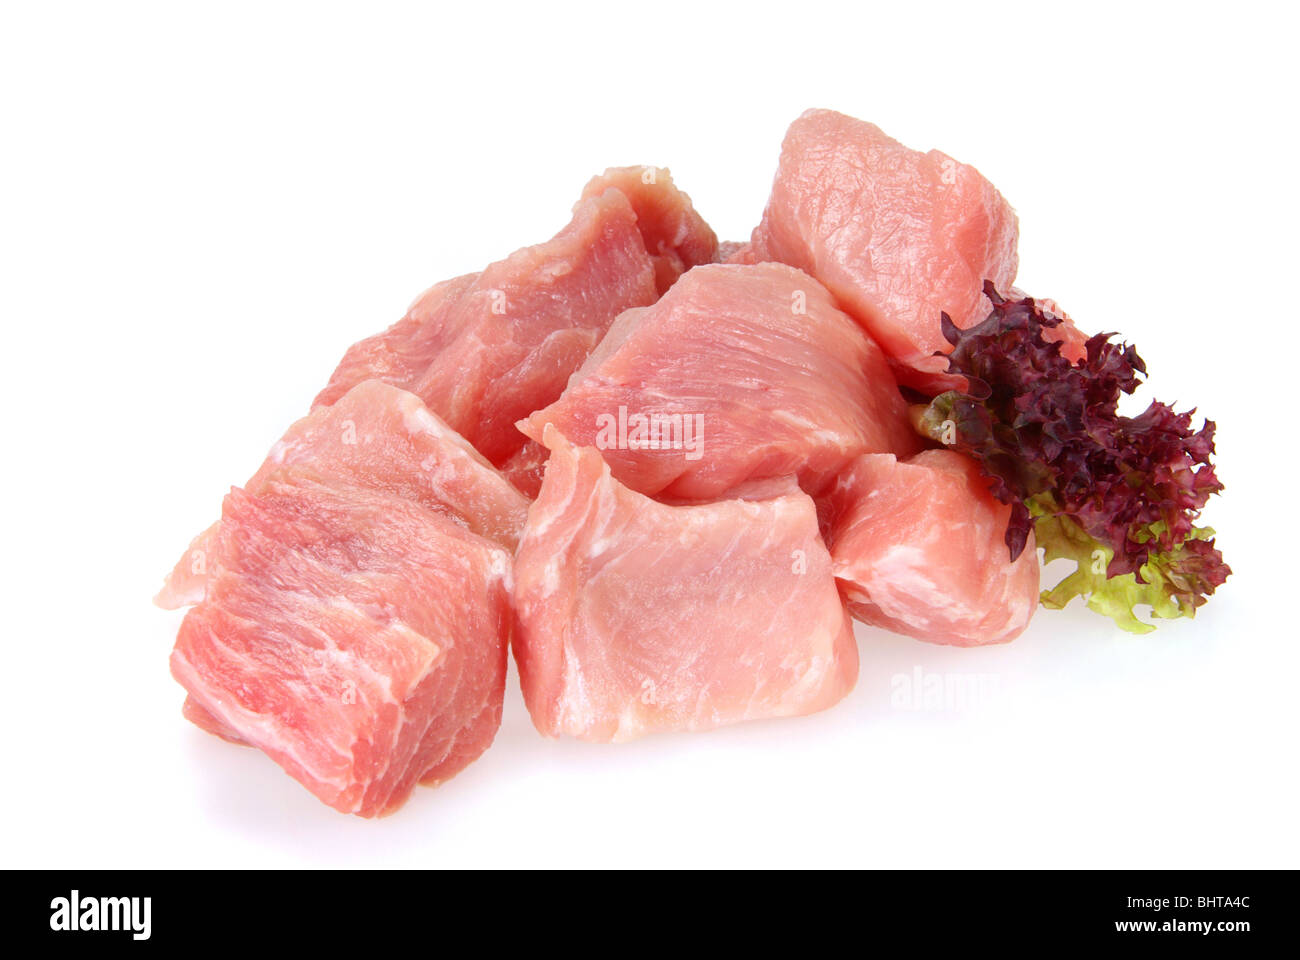 Schweinefleisch roh - carne di maiale raw 08 Foto Stock